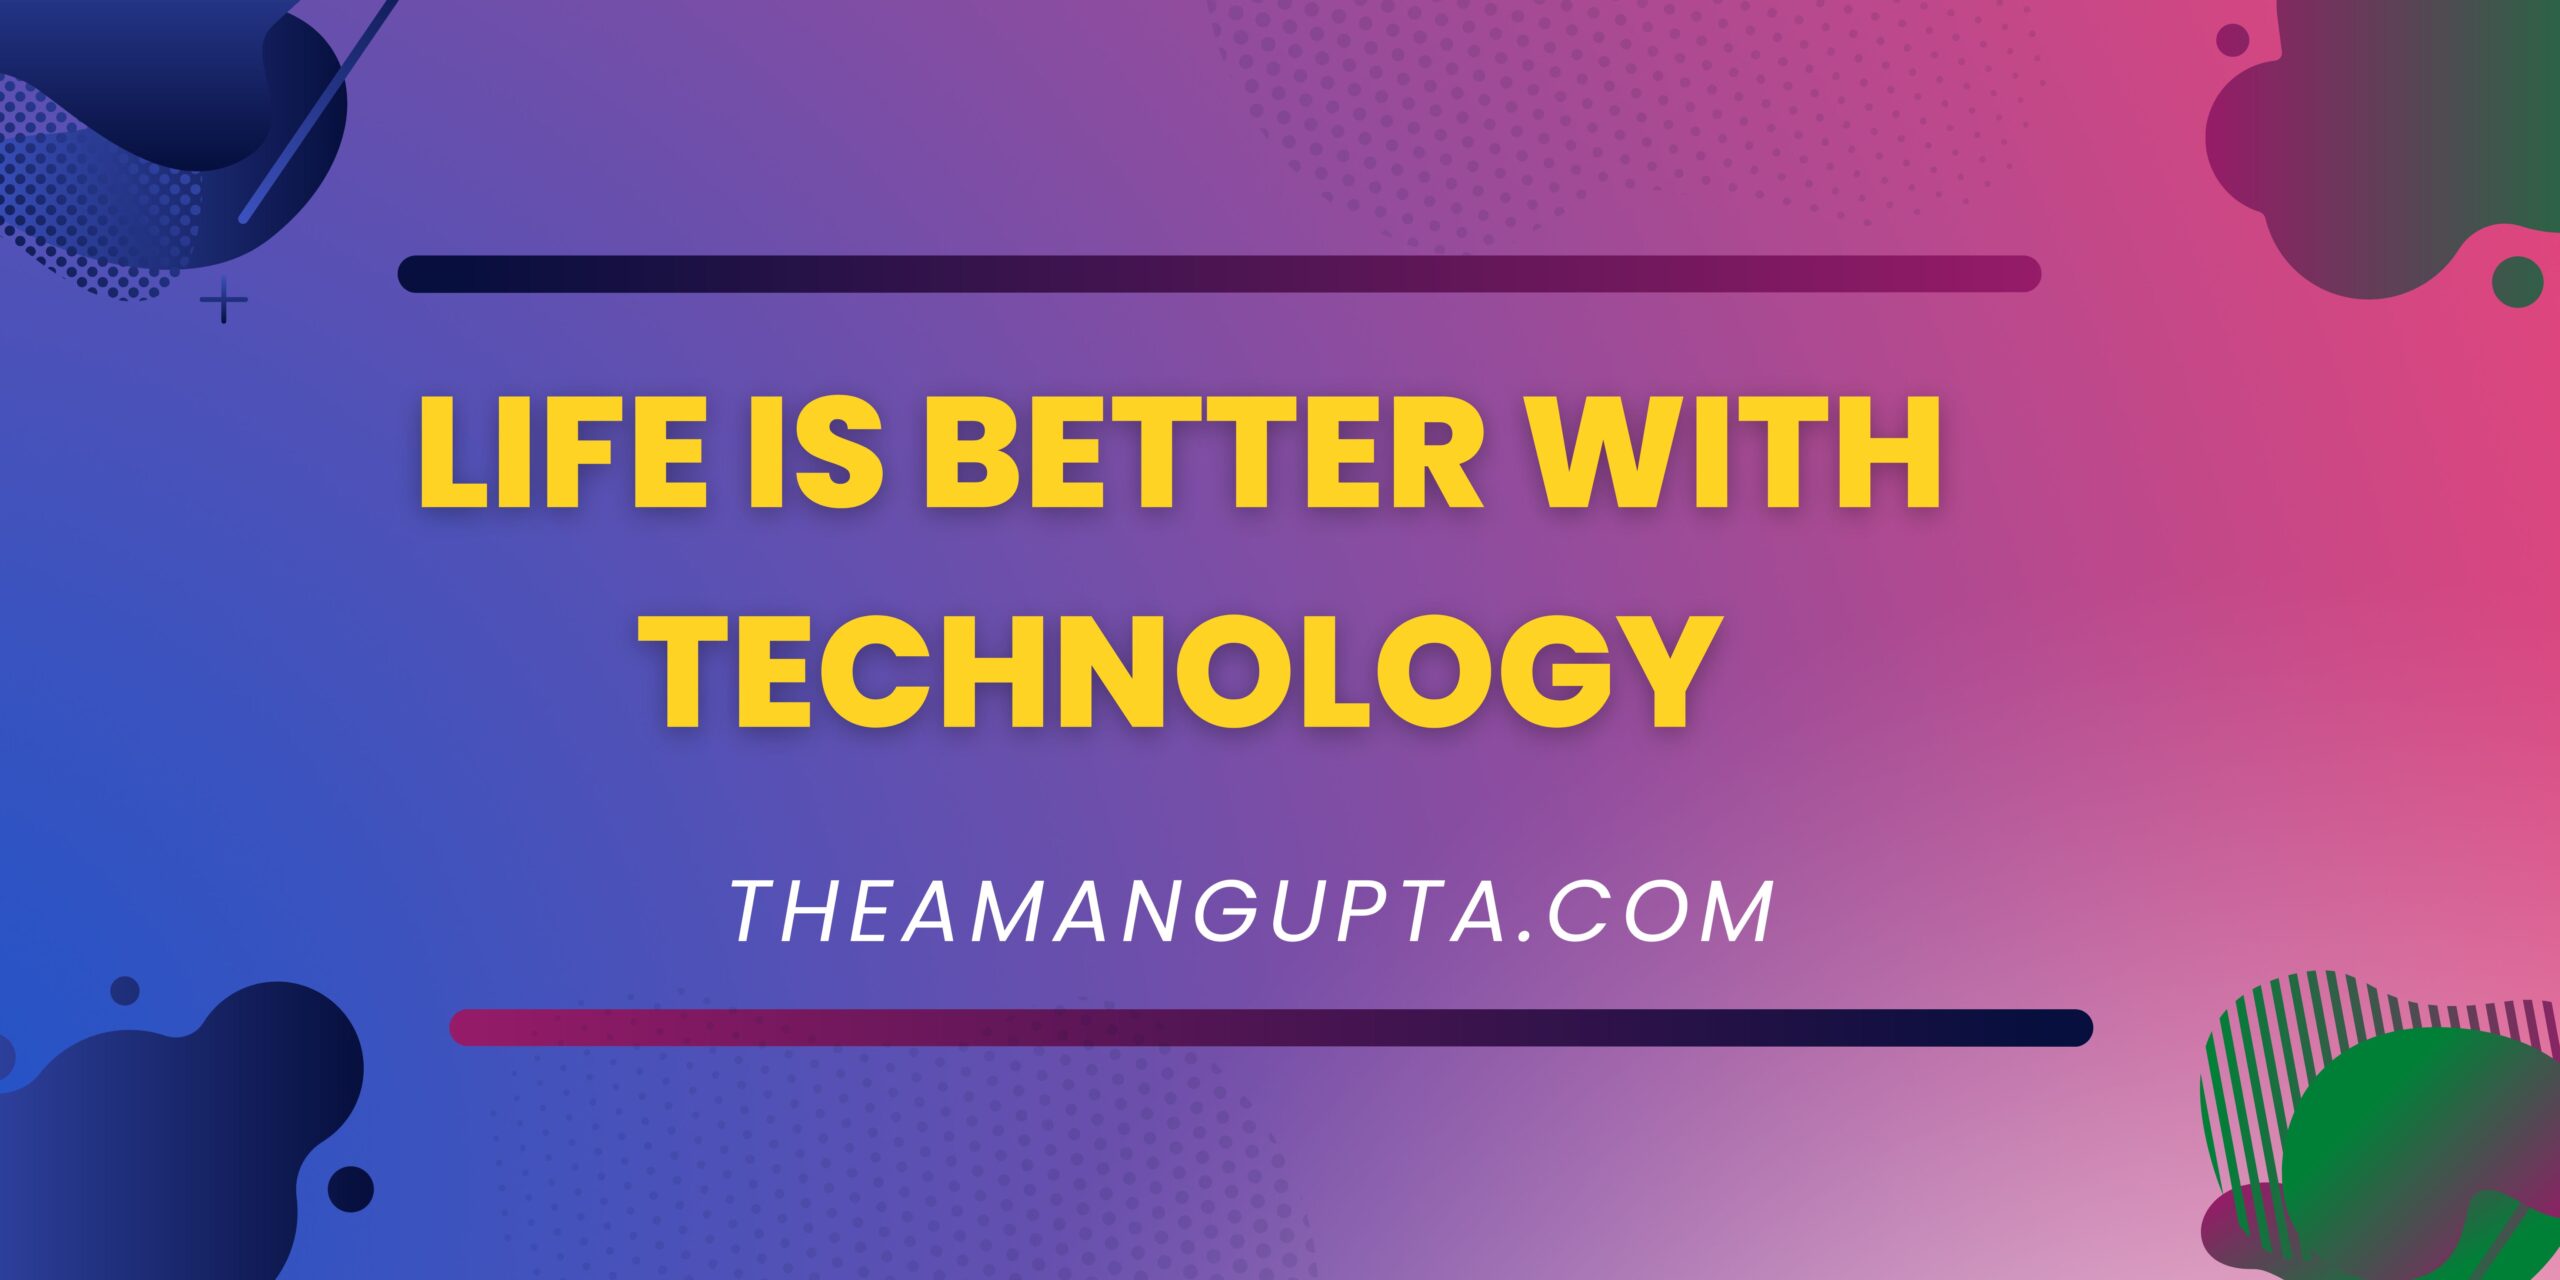 Life Is Better With Technology|Technology|Tannu Rani|Theamangupta